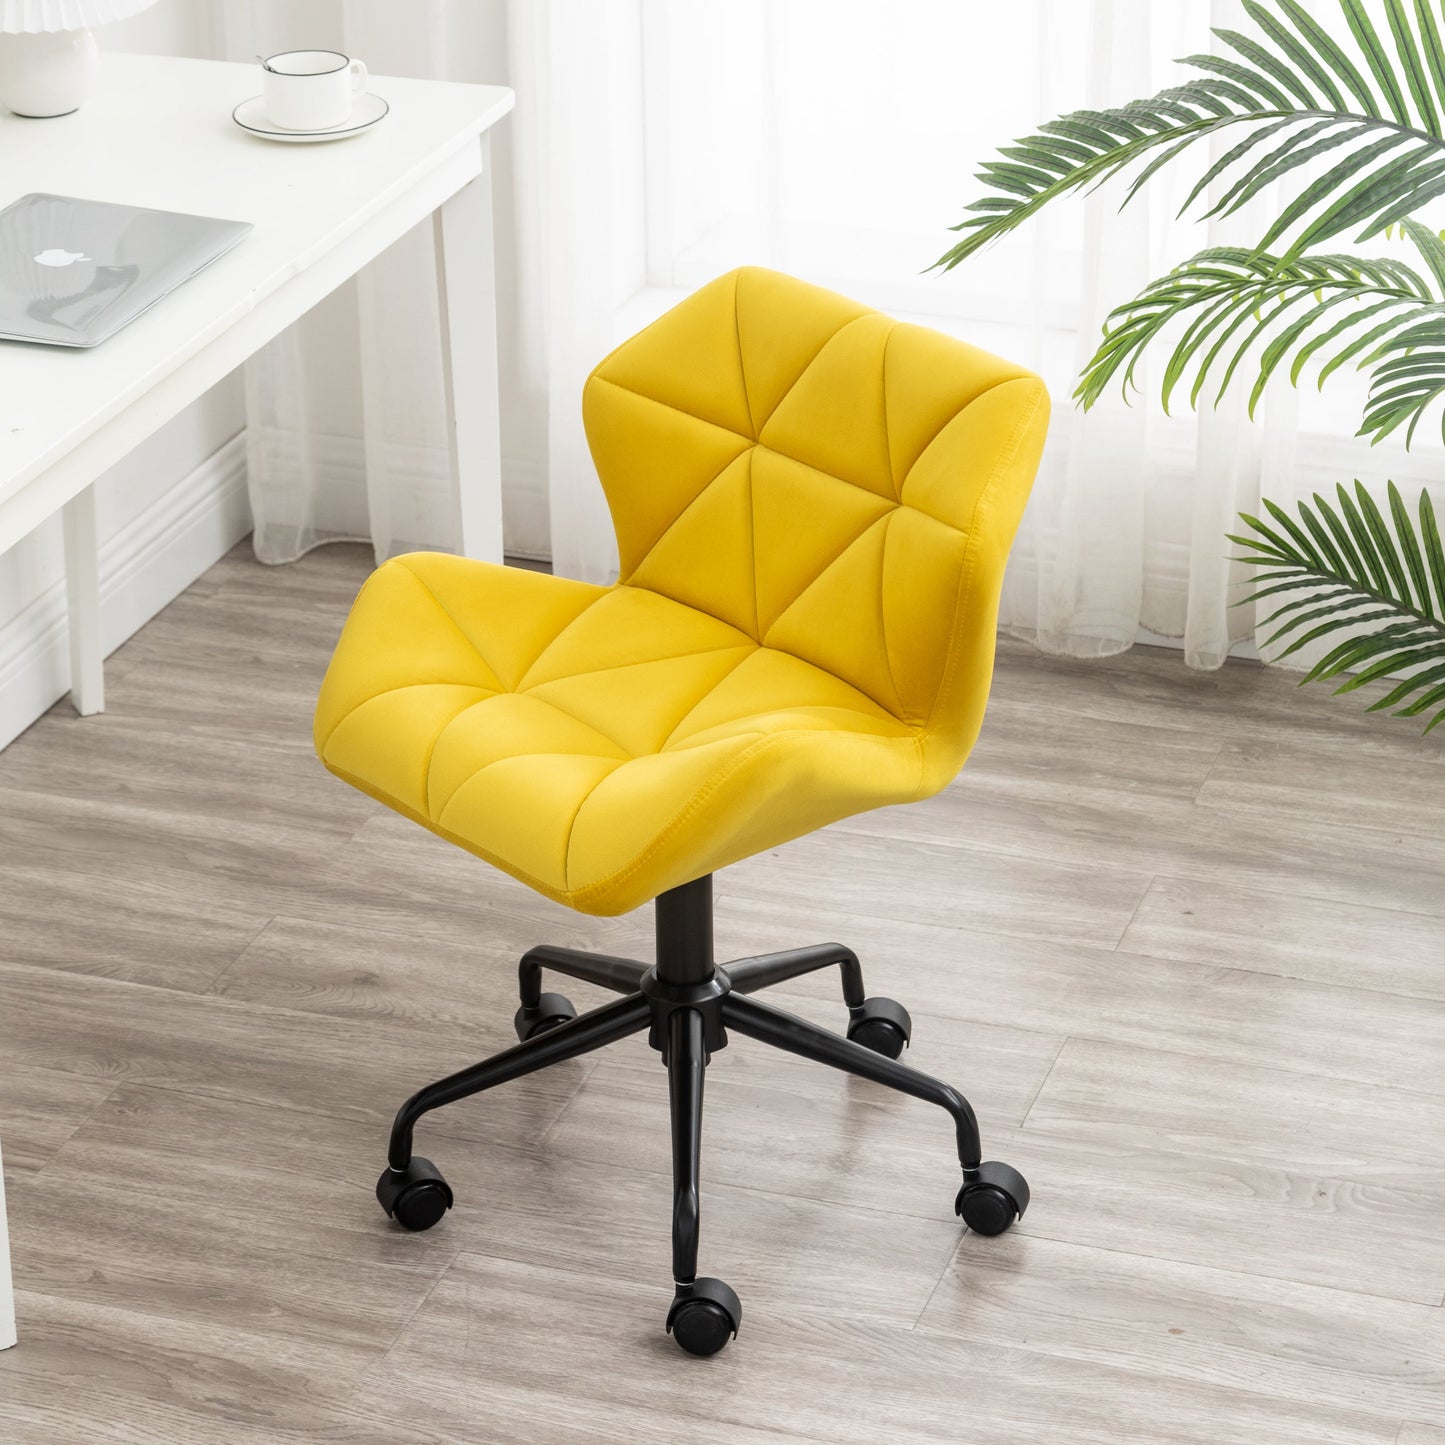 Eldon Diamond Tufted Adjustable Swivel Office Chair, Yellow